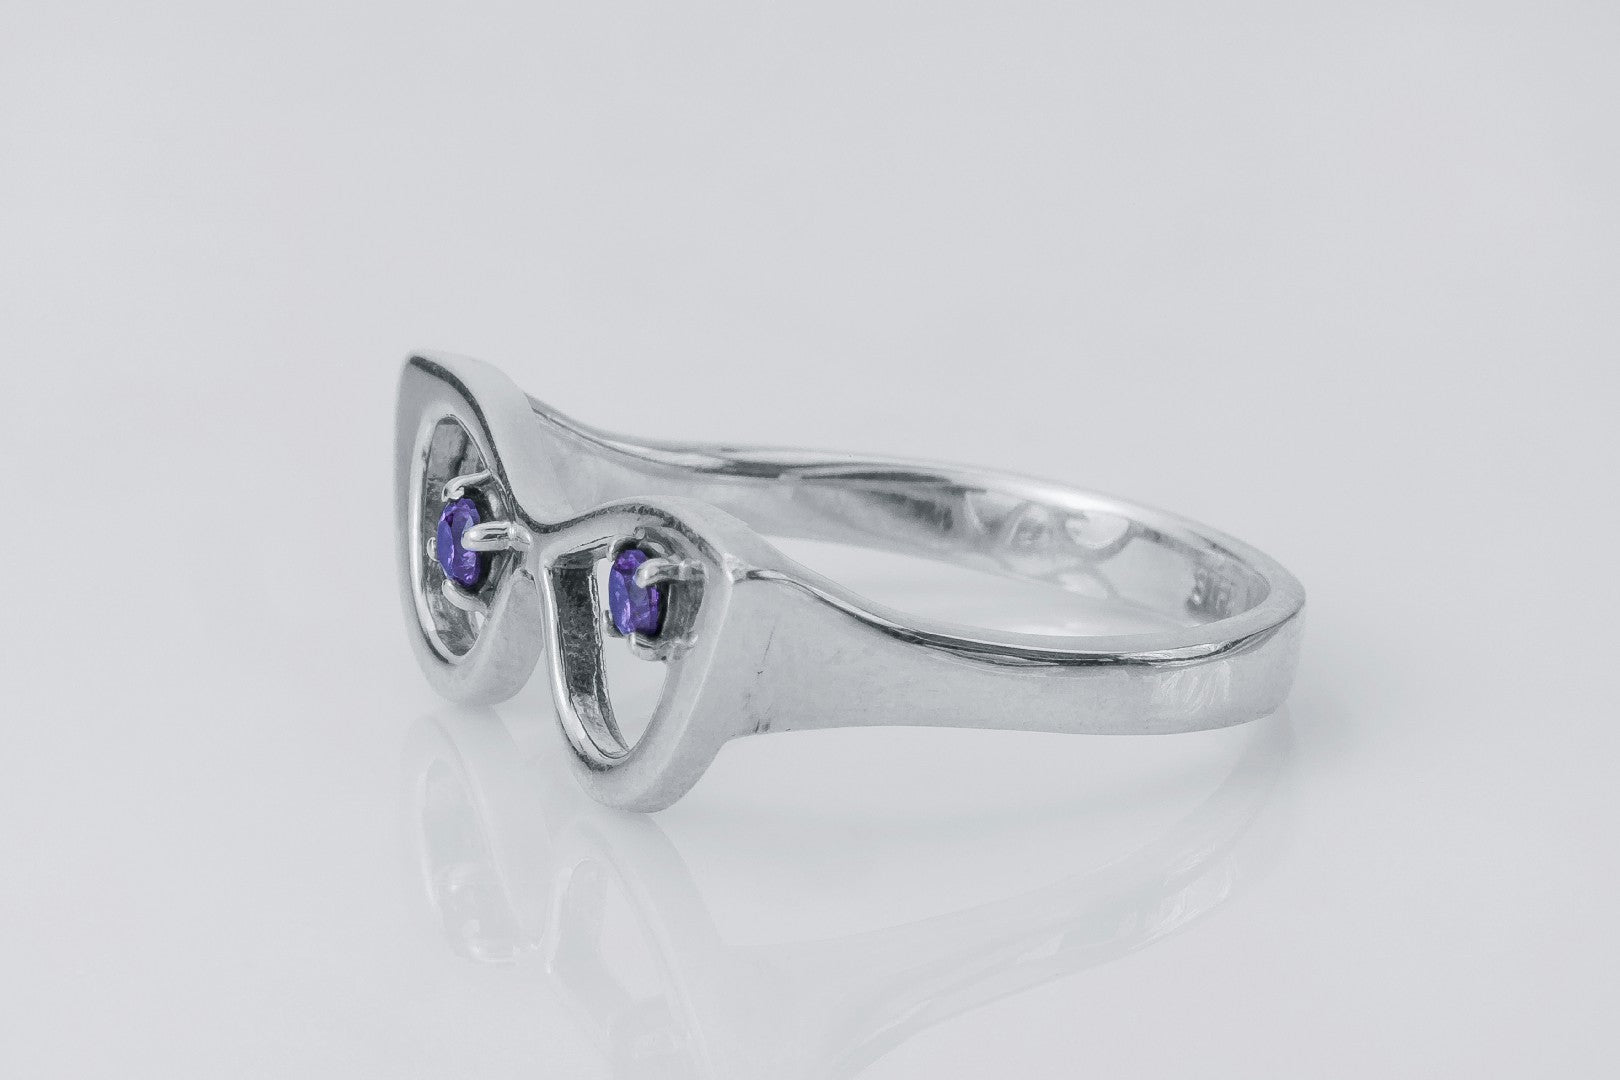 Unique Sunglasses Ring with Purple Gems